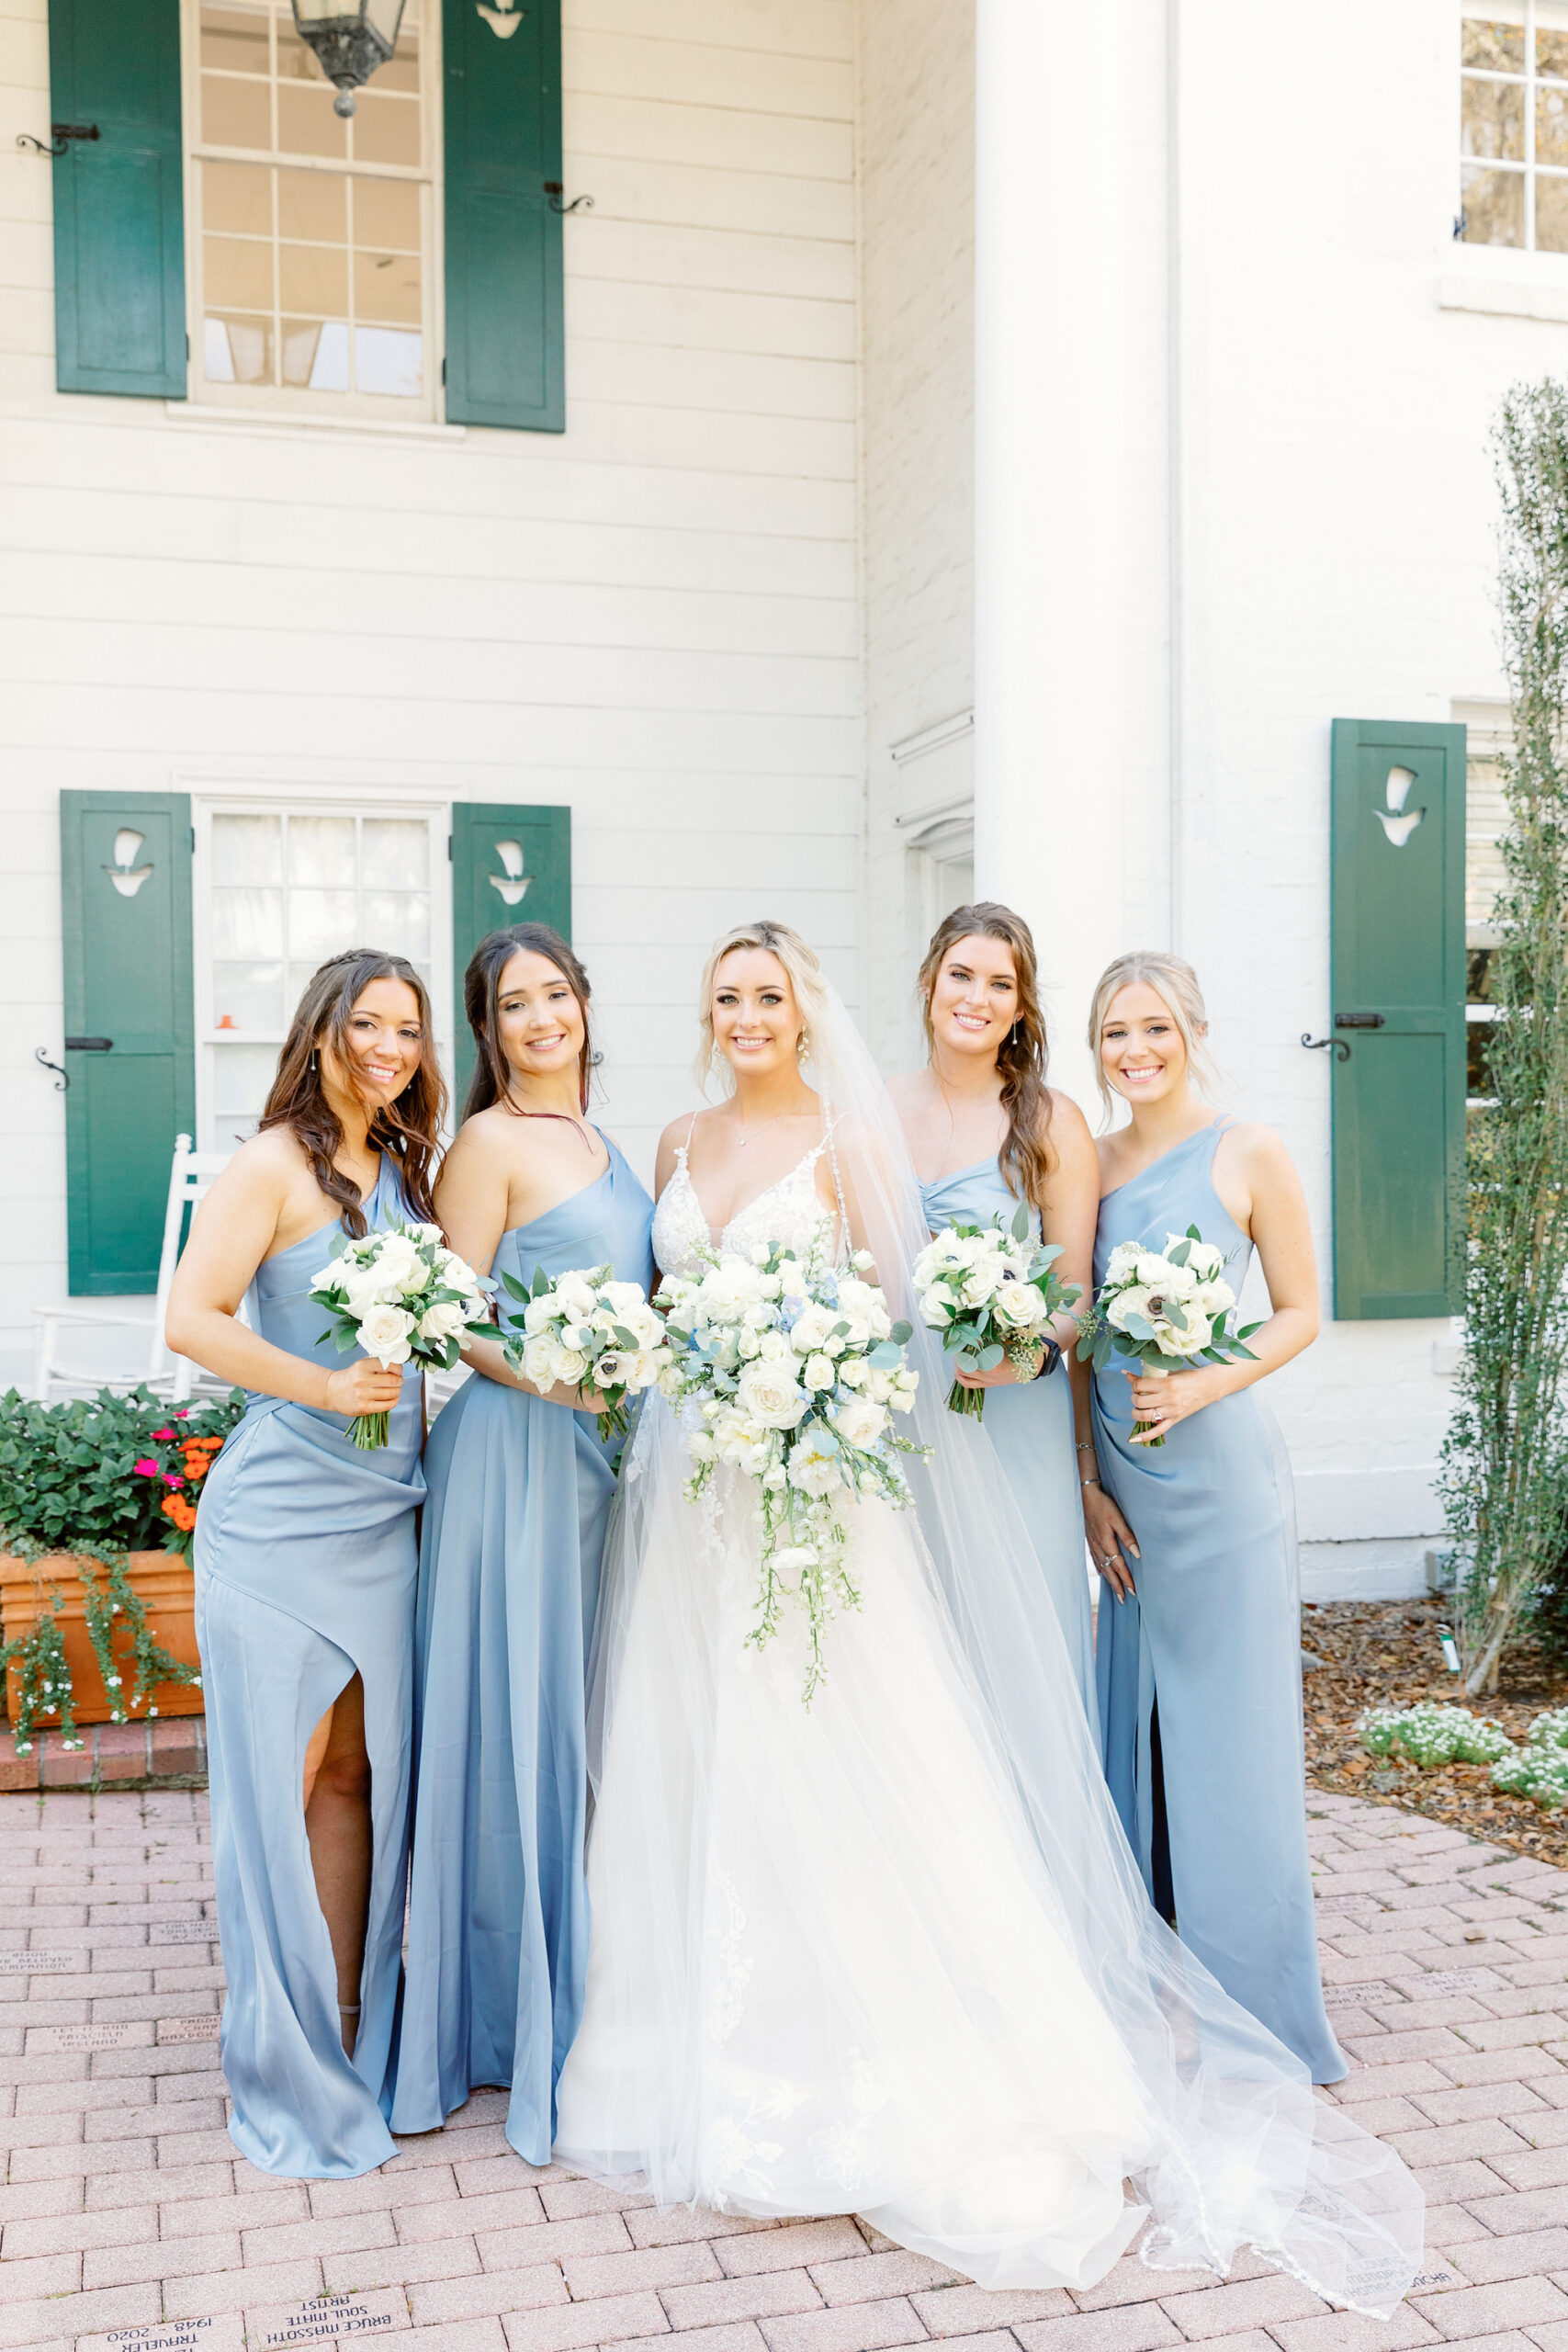 Bridal Party Attire Ideas for Spring Garden Wedding | Matching Dusty Blue Bridesmaids Wedding Dresses | White Rose and Blue Delphinium Bouquets | Sarasota Florist Botanica International Design Studio